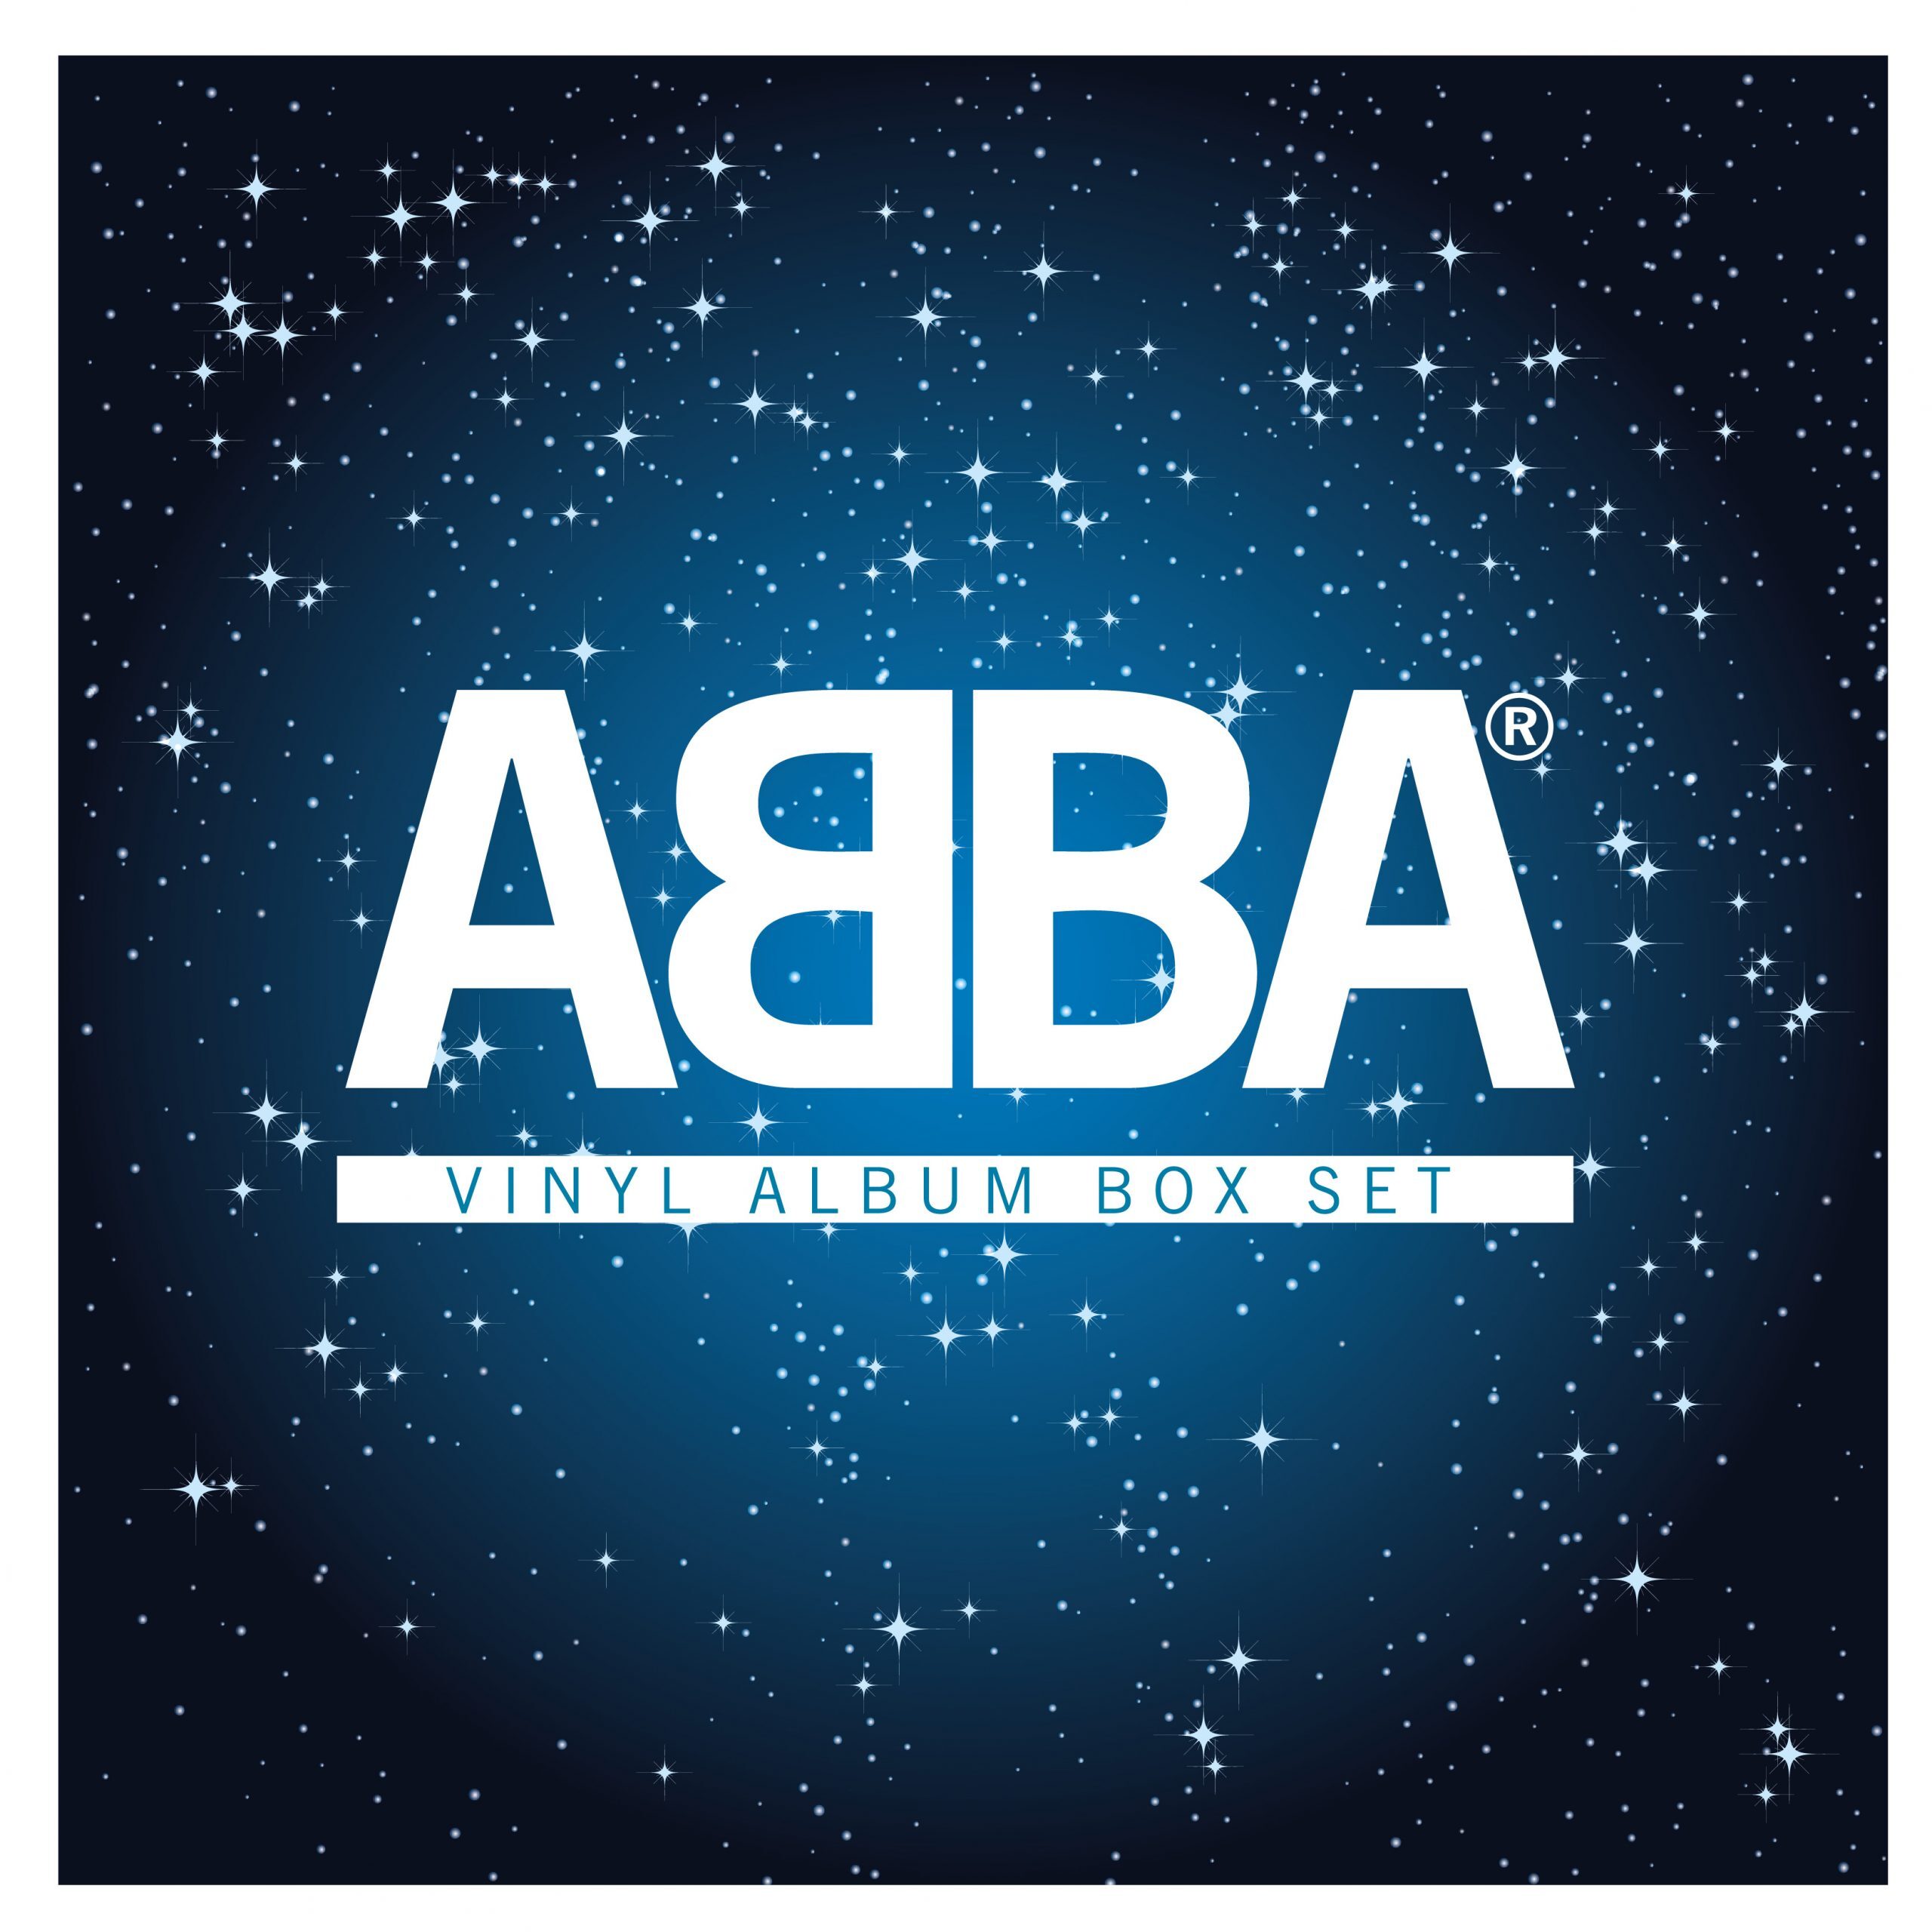 ABBA Studio Albums (Vinyl) Vinyl Box Set - Picture 1 of 1